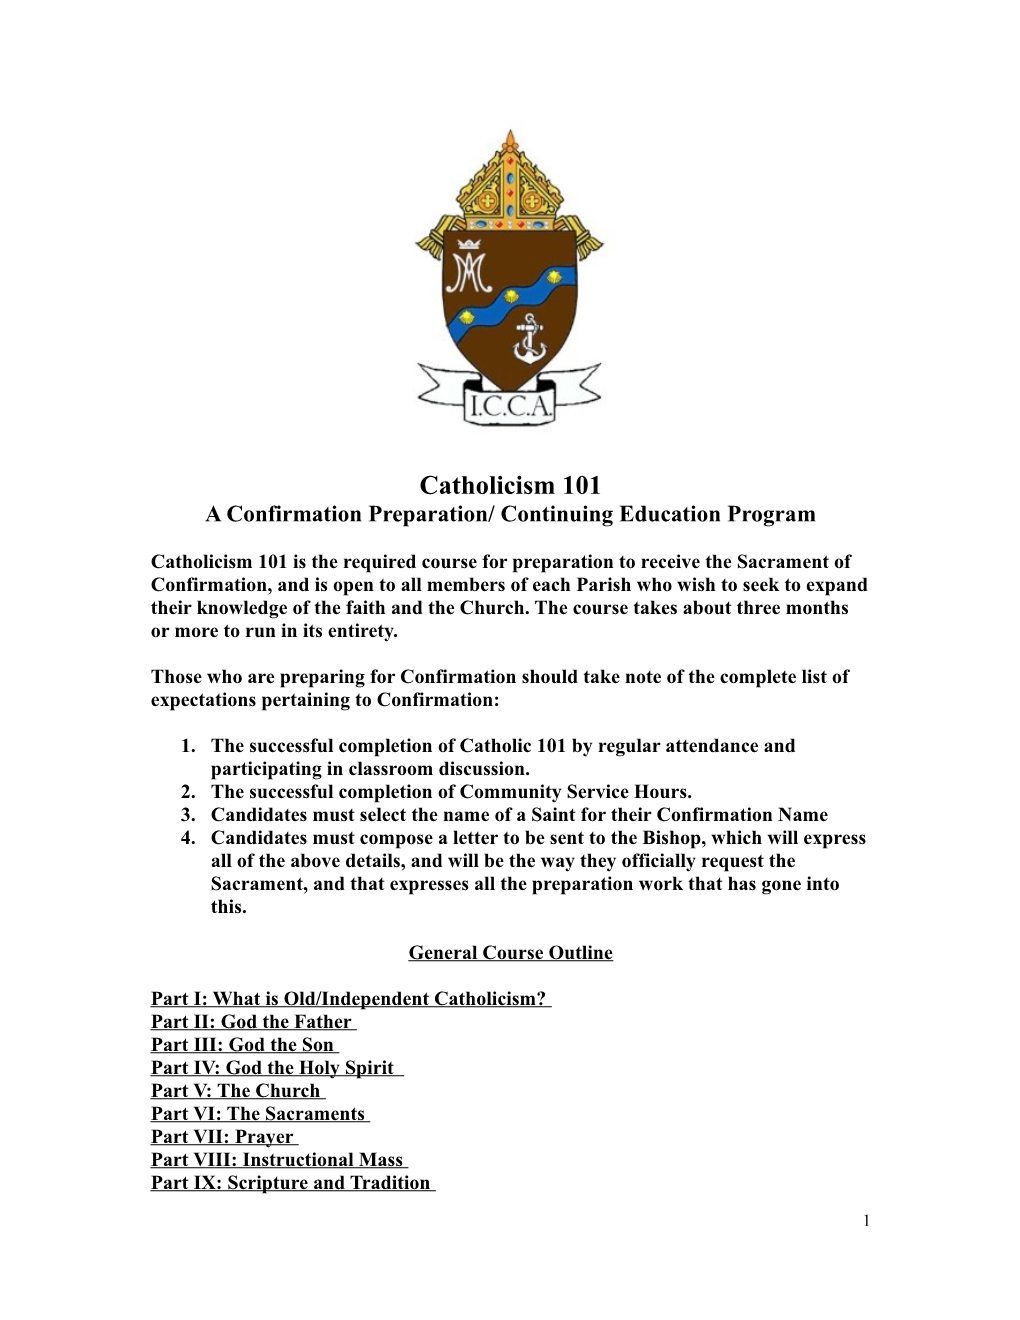 A Confirmation Preparation/ Continuing Education Program